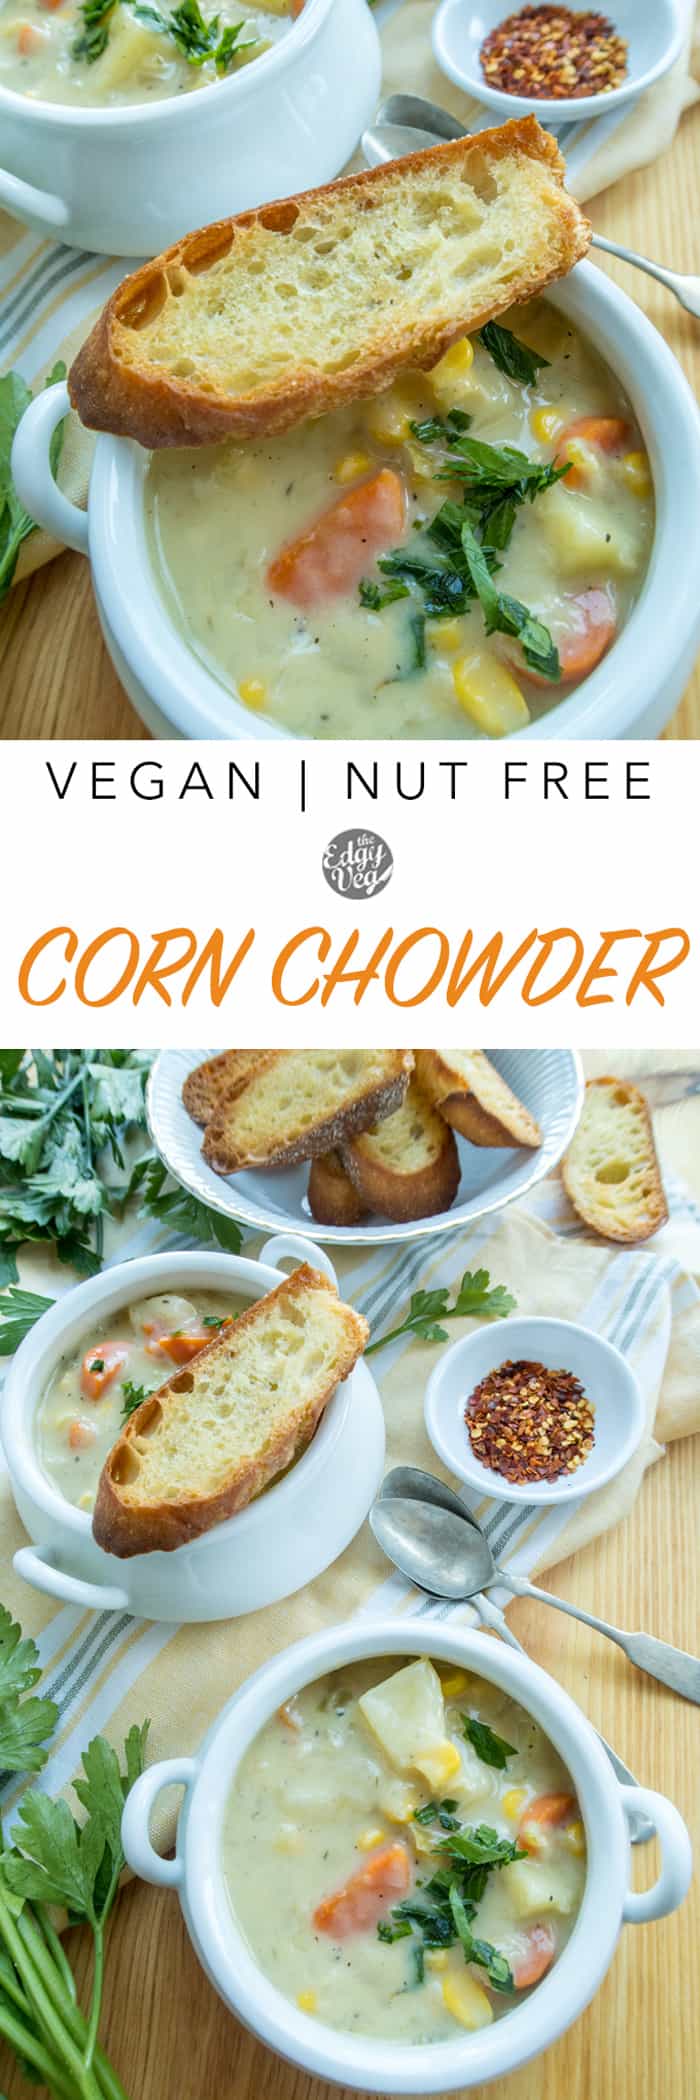 Pinterest corn chowder recipe